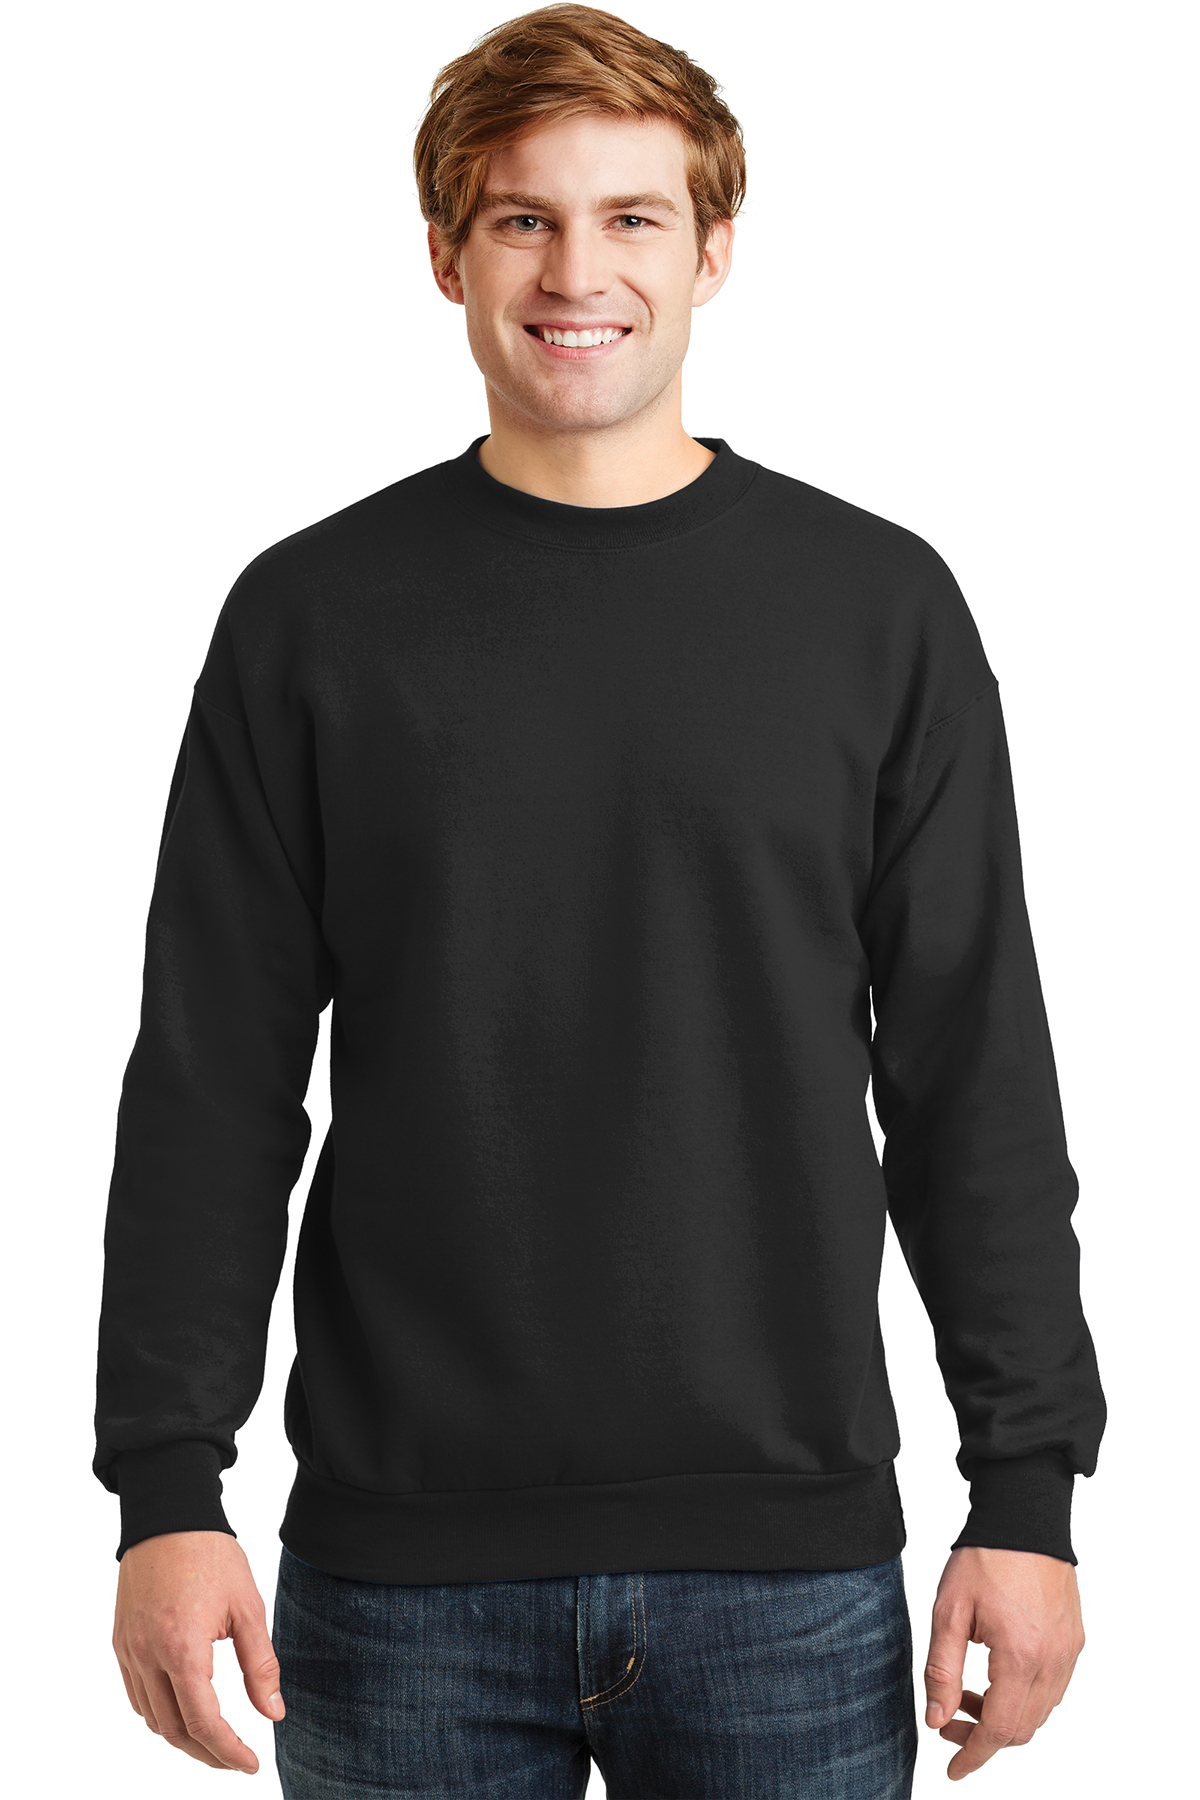 New Brand Sweatshirt Men Hoodies Fashion Solid Fleece